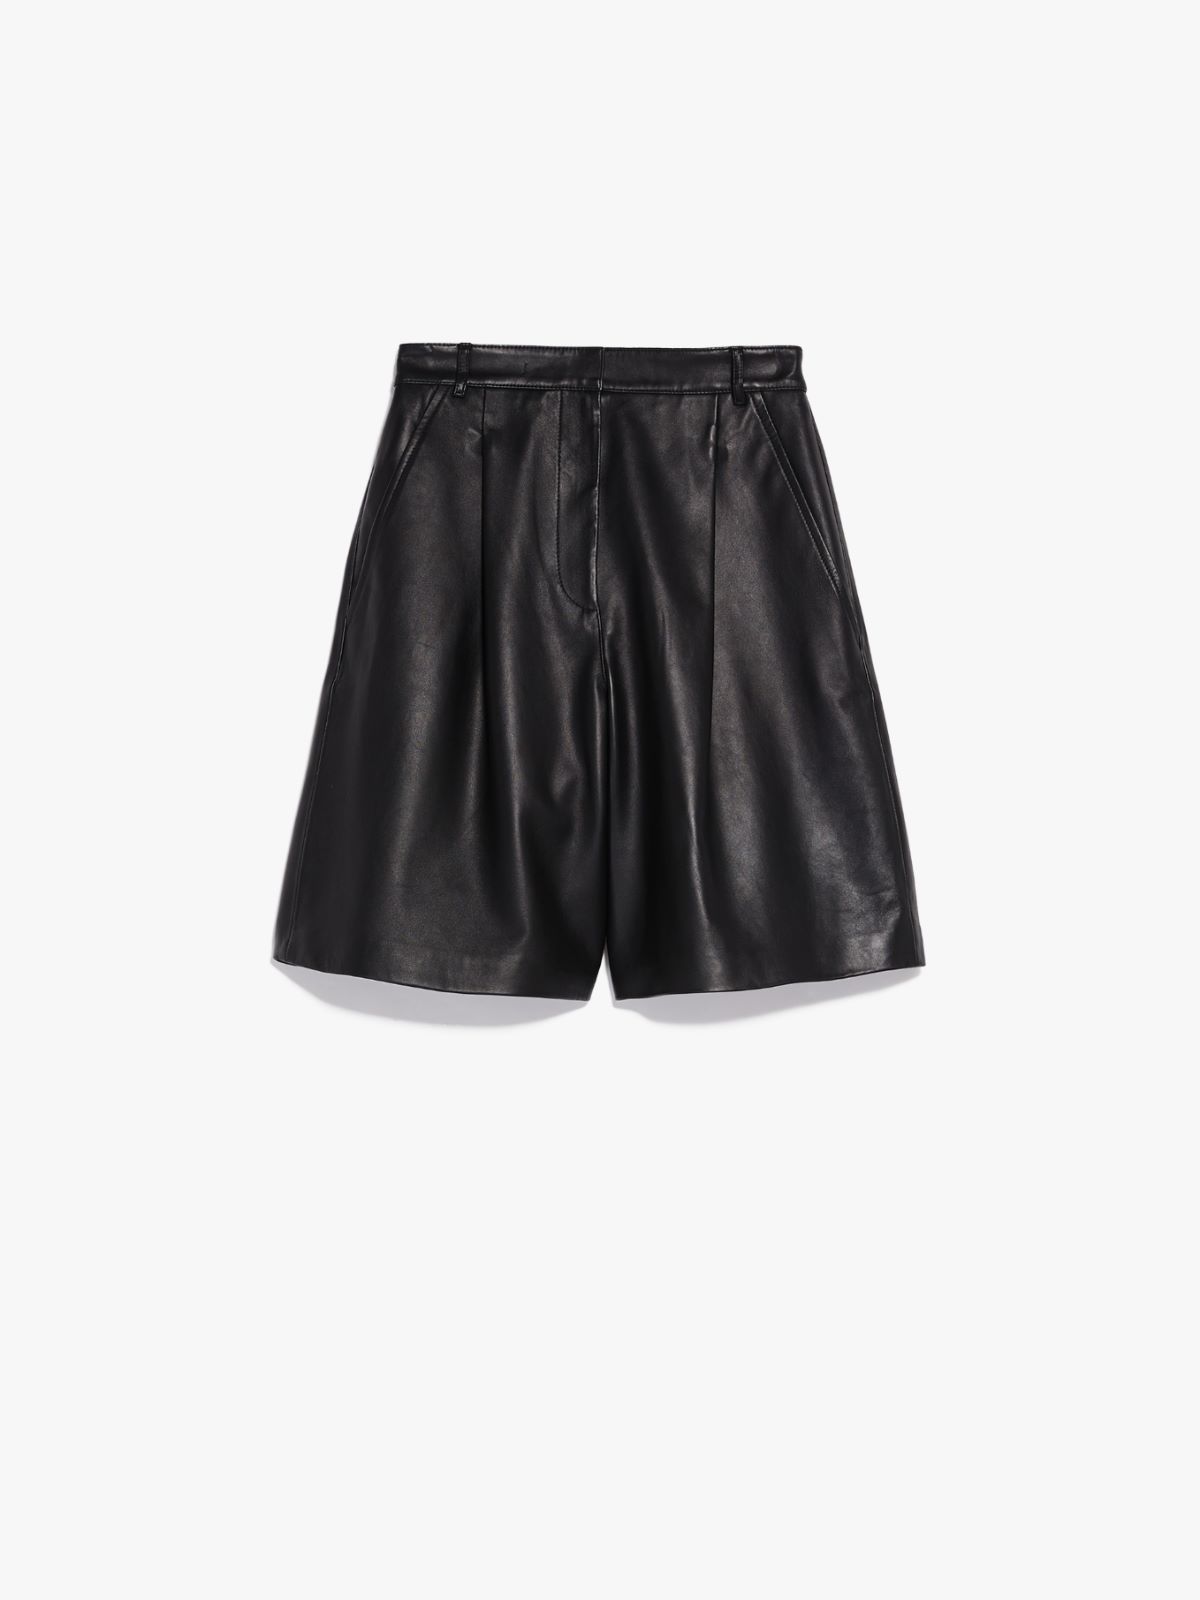 Nappa leather Bermuda shorts - BLACK - Weekend Max Mara - 5